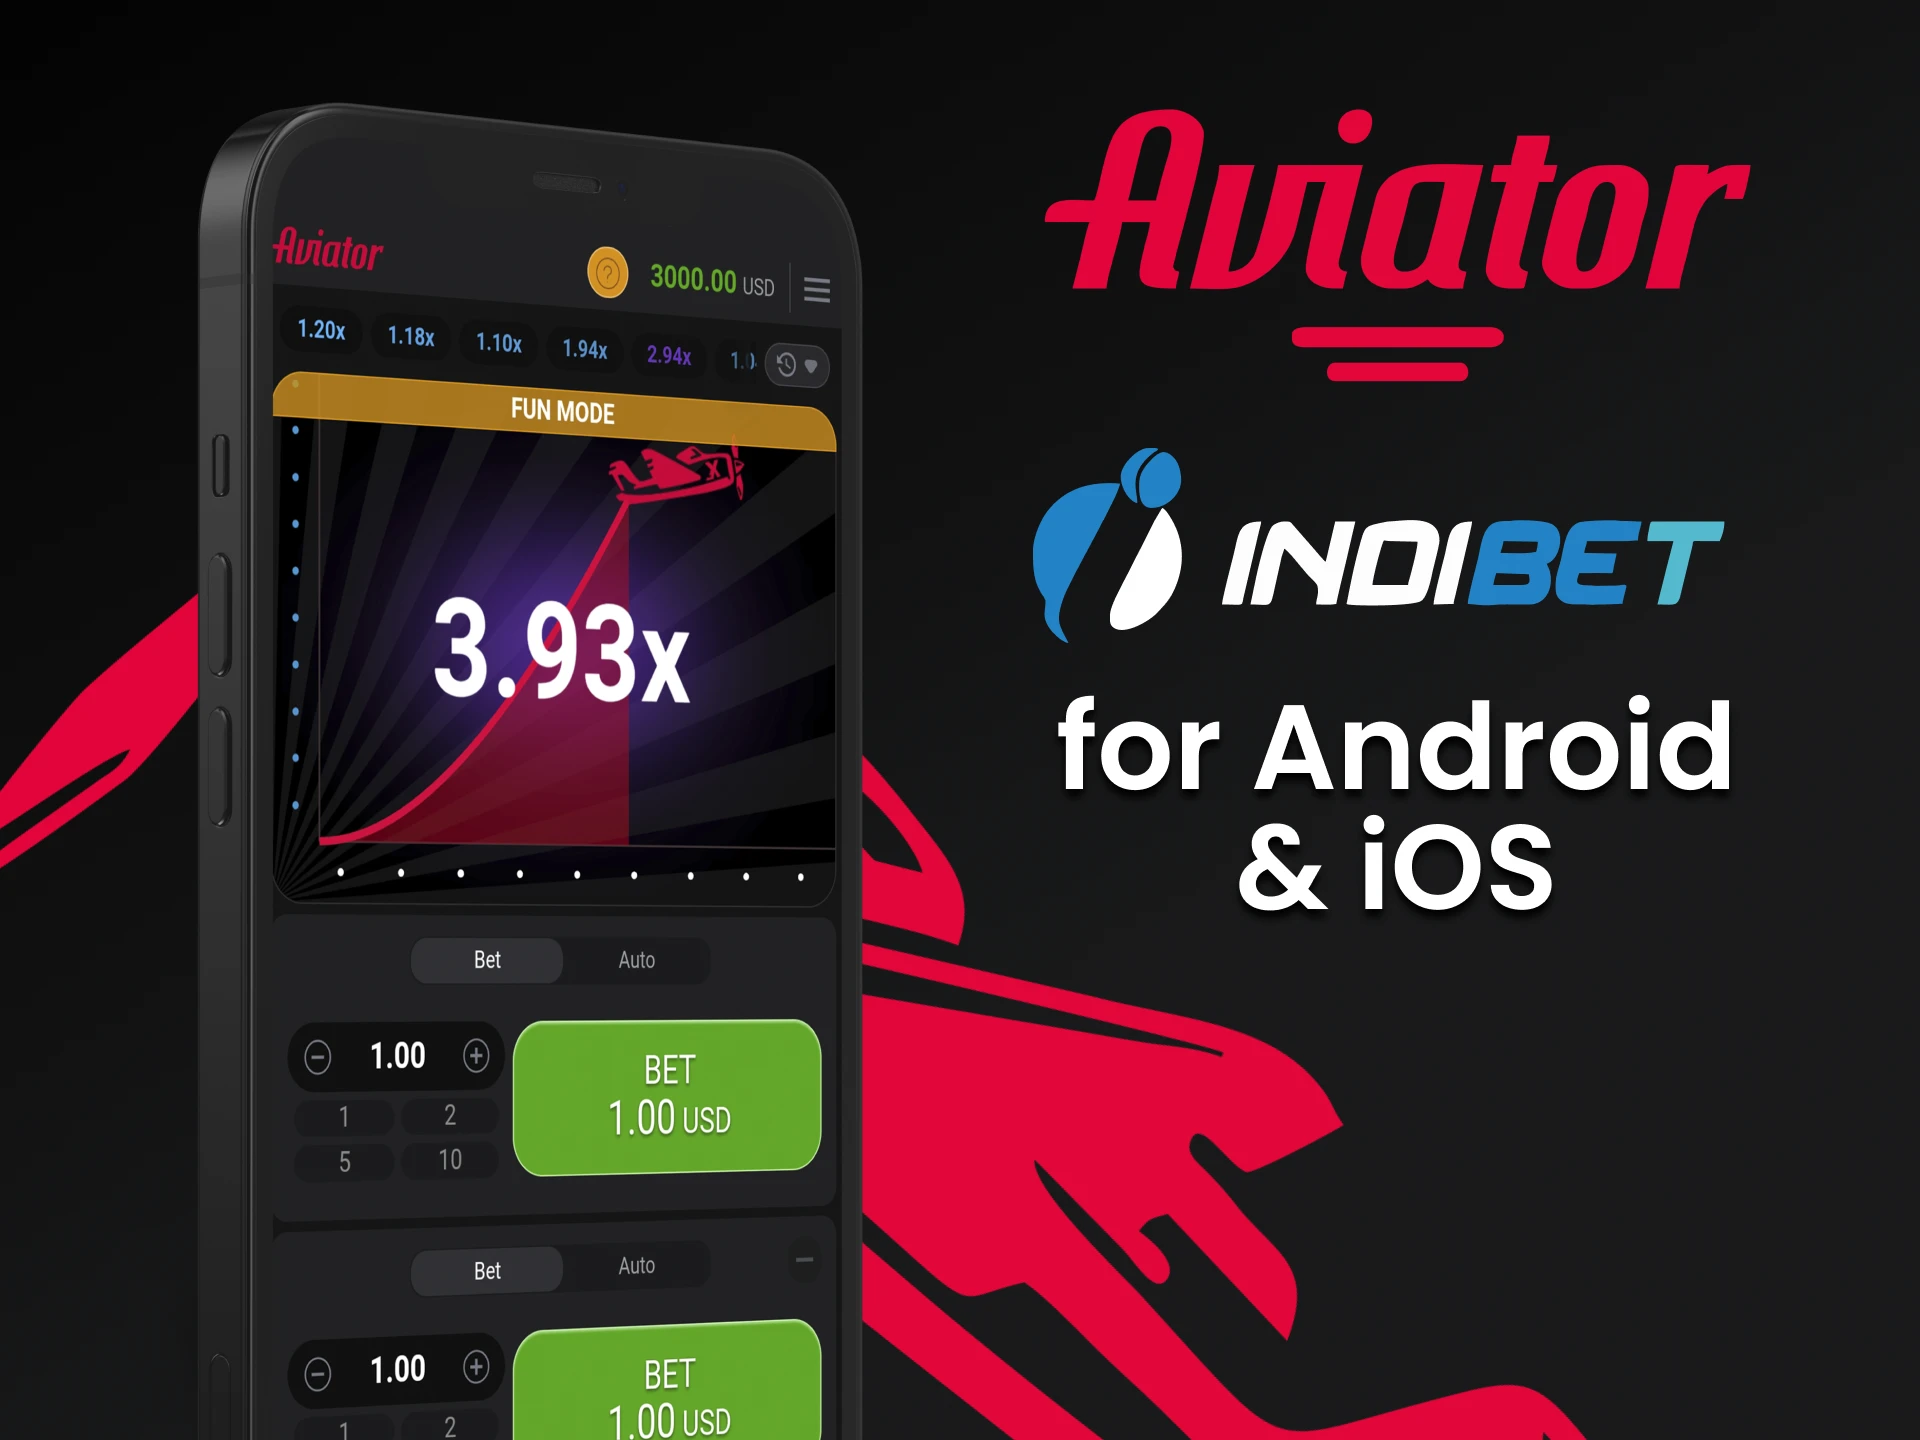 Download the Indibet app to play Aviator.